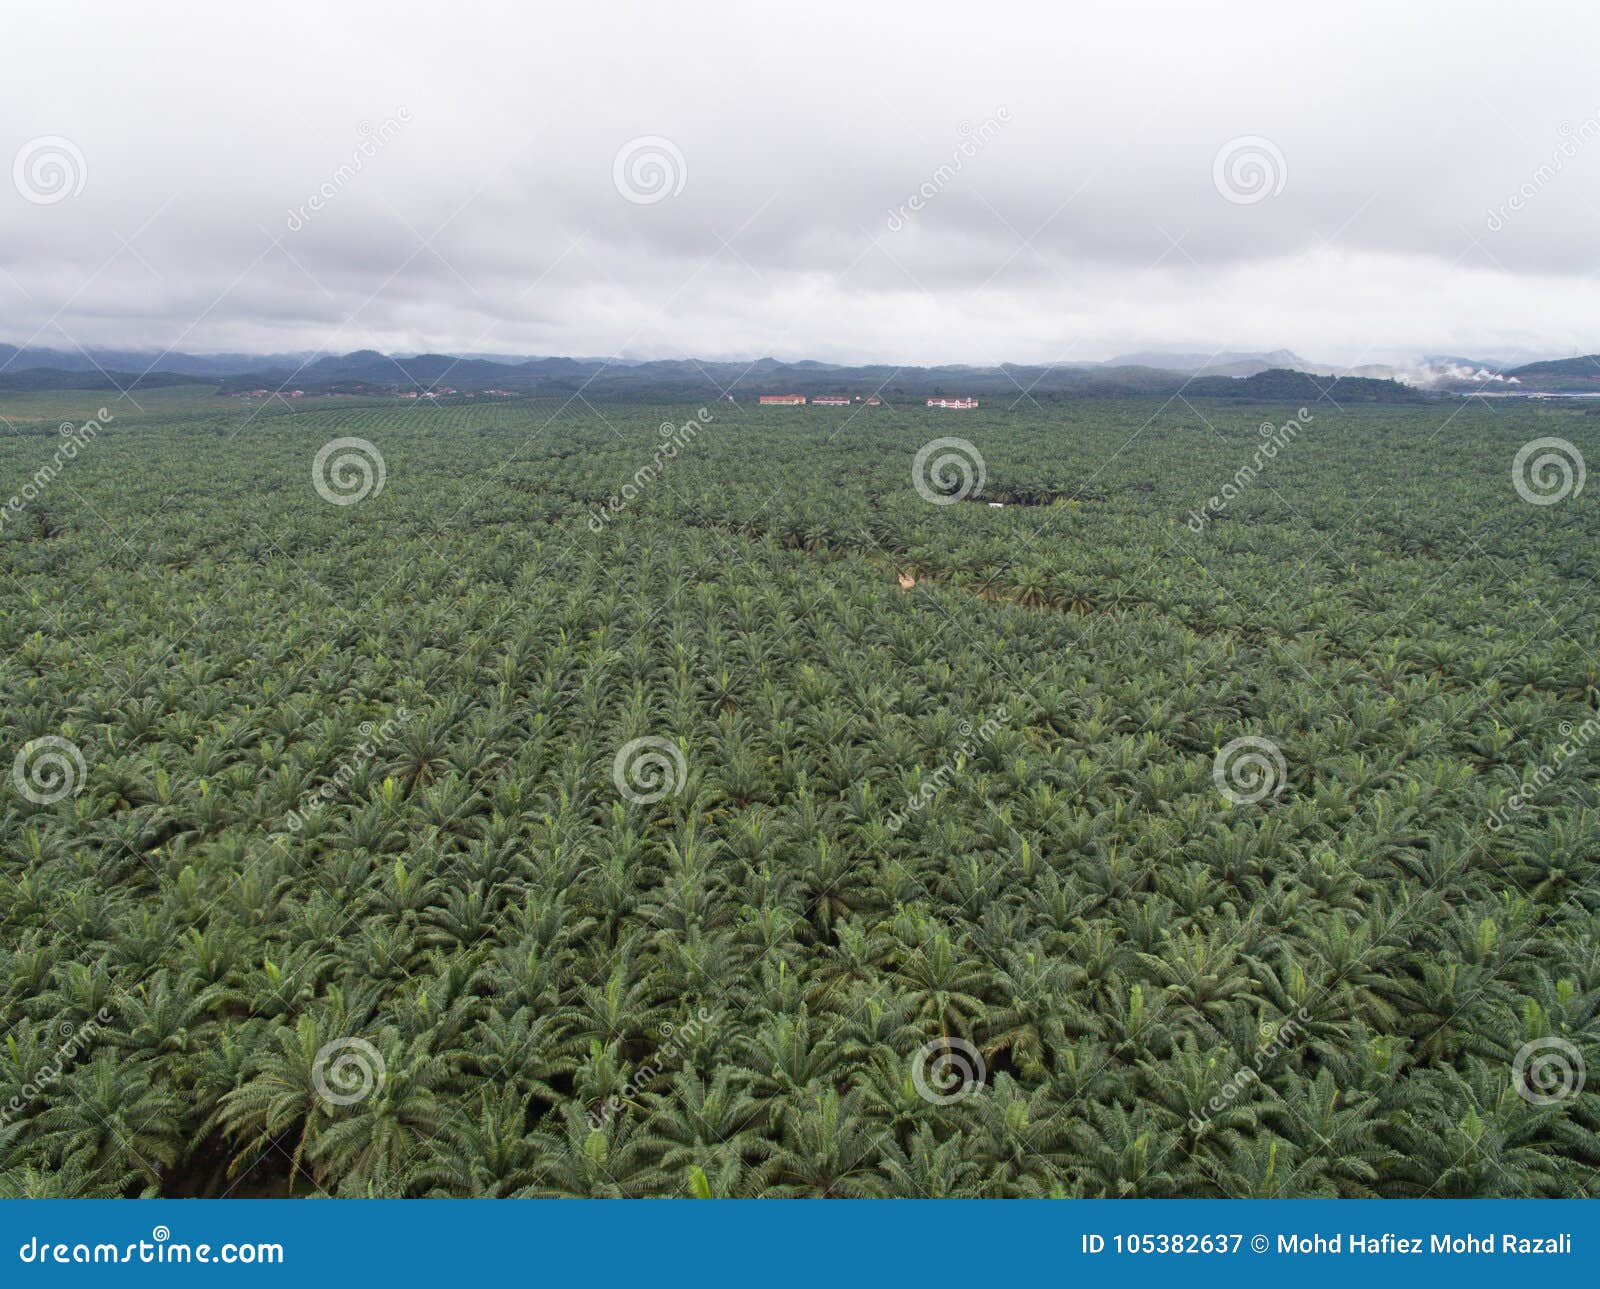 aerial view of palm oil plantation located in kuala krai,kelantan,malaysia,east asia